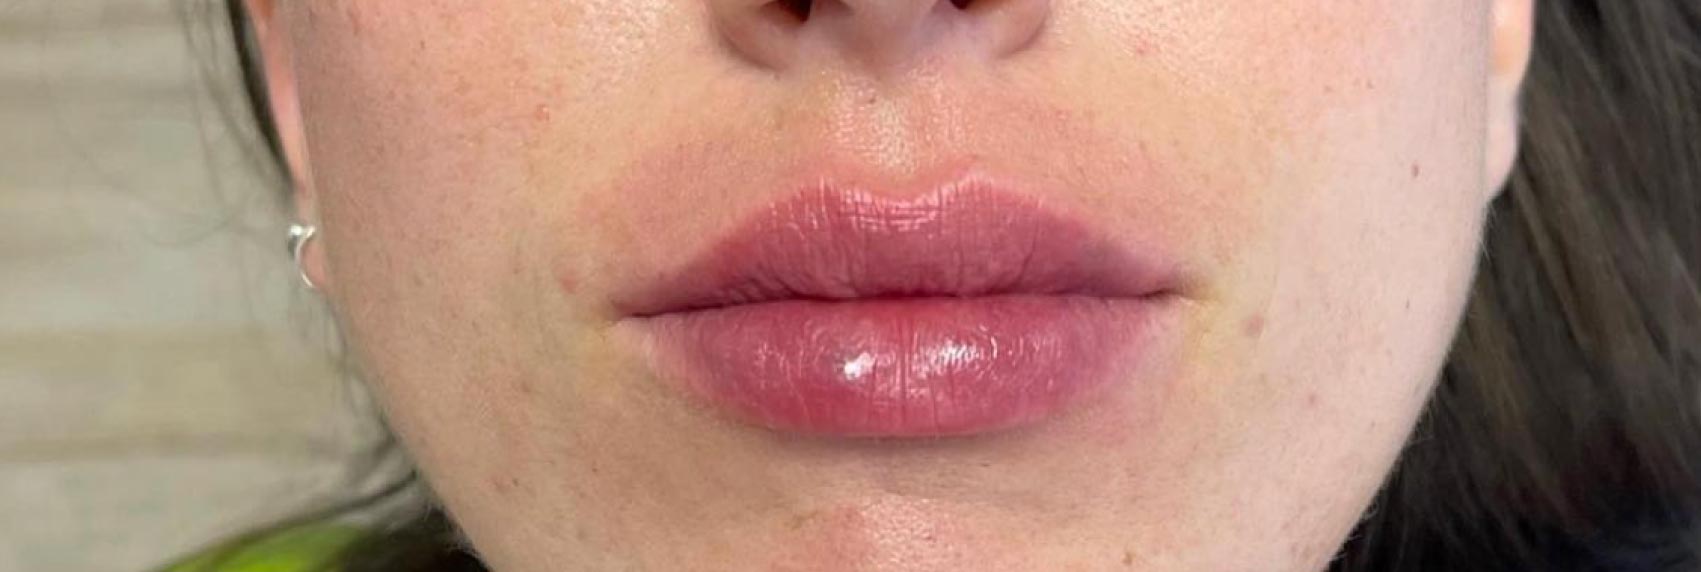 tratamiento estética labios torrent